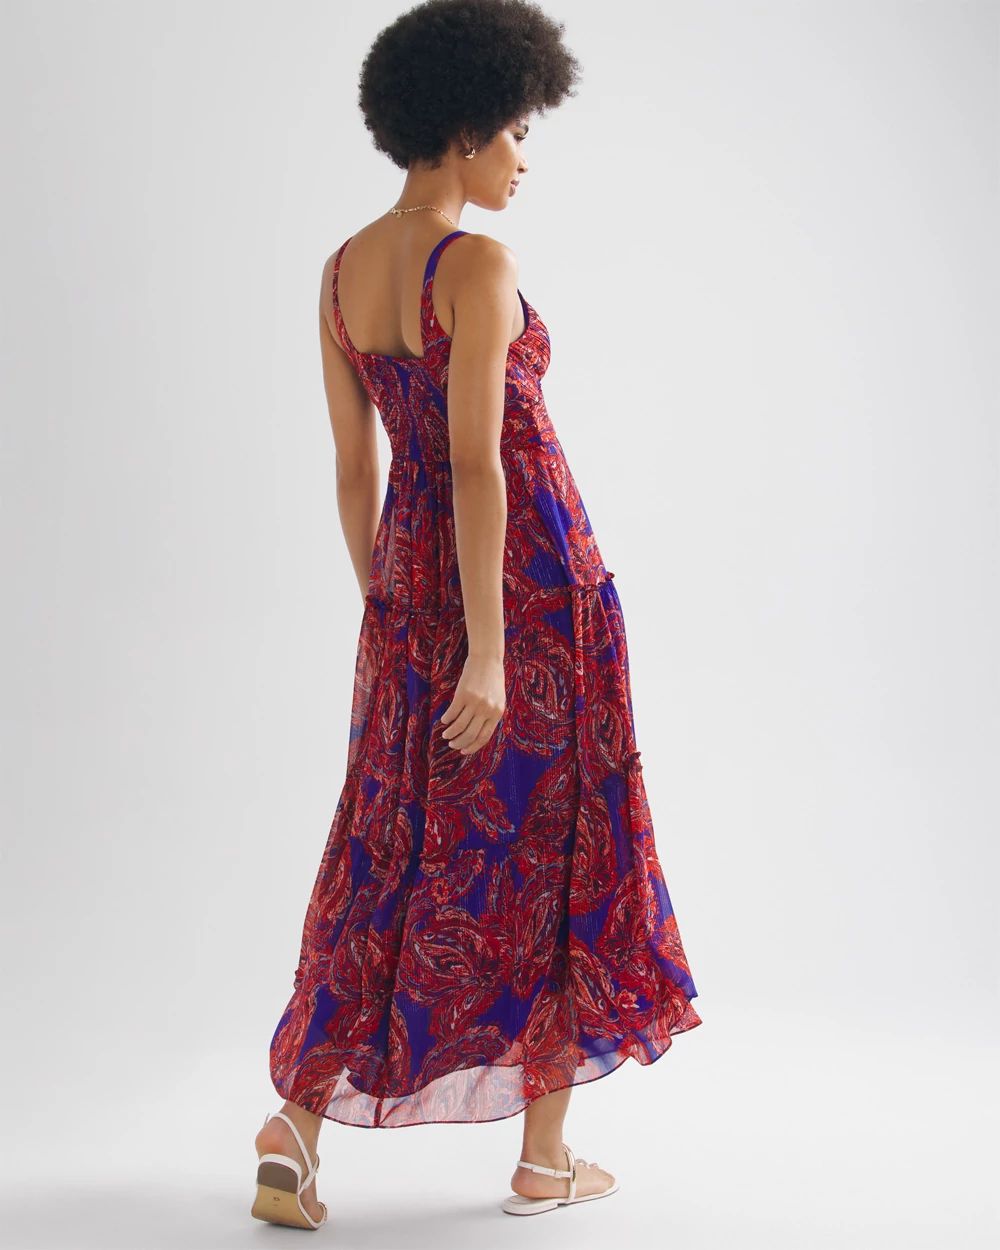 Petite Paisley Midi Dress click to view larger image.